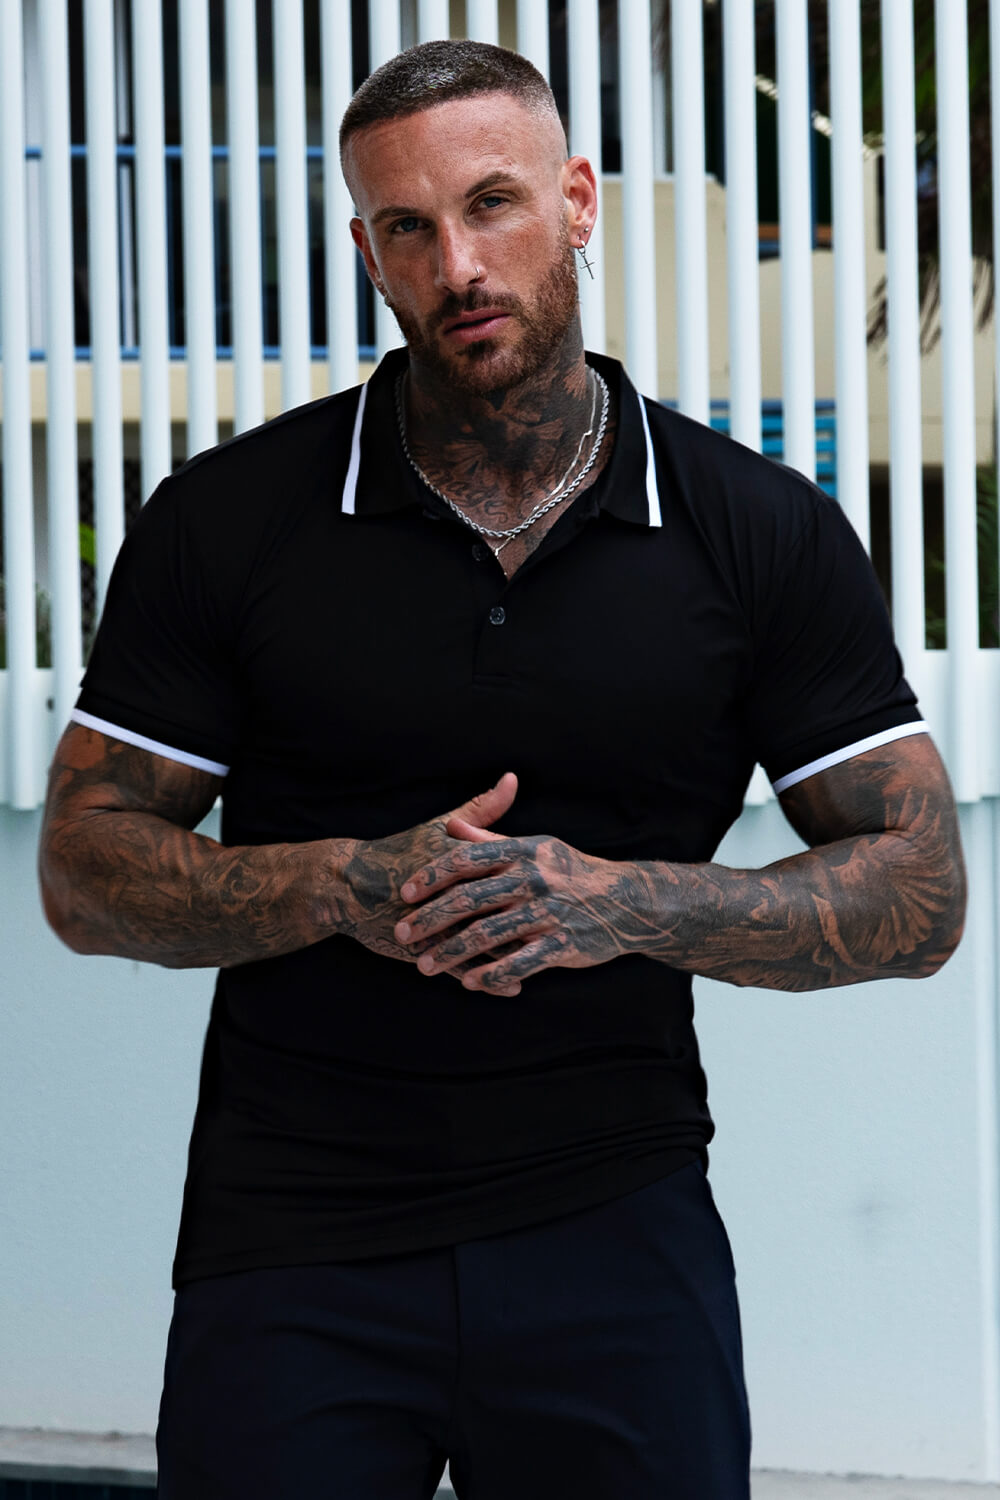 Men's High Quality Slim Fit Polo Shirt - Black